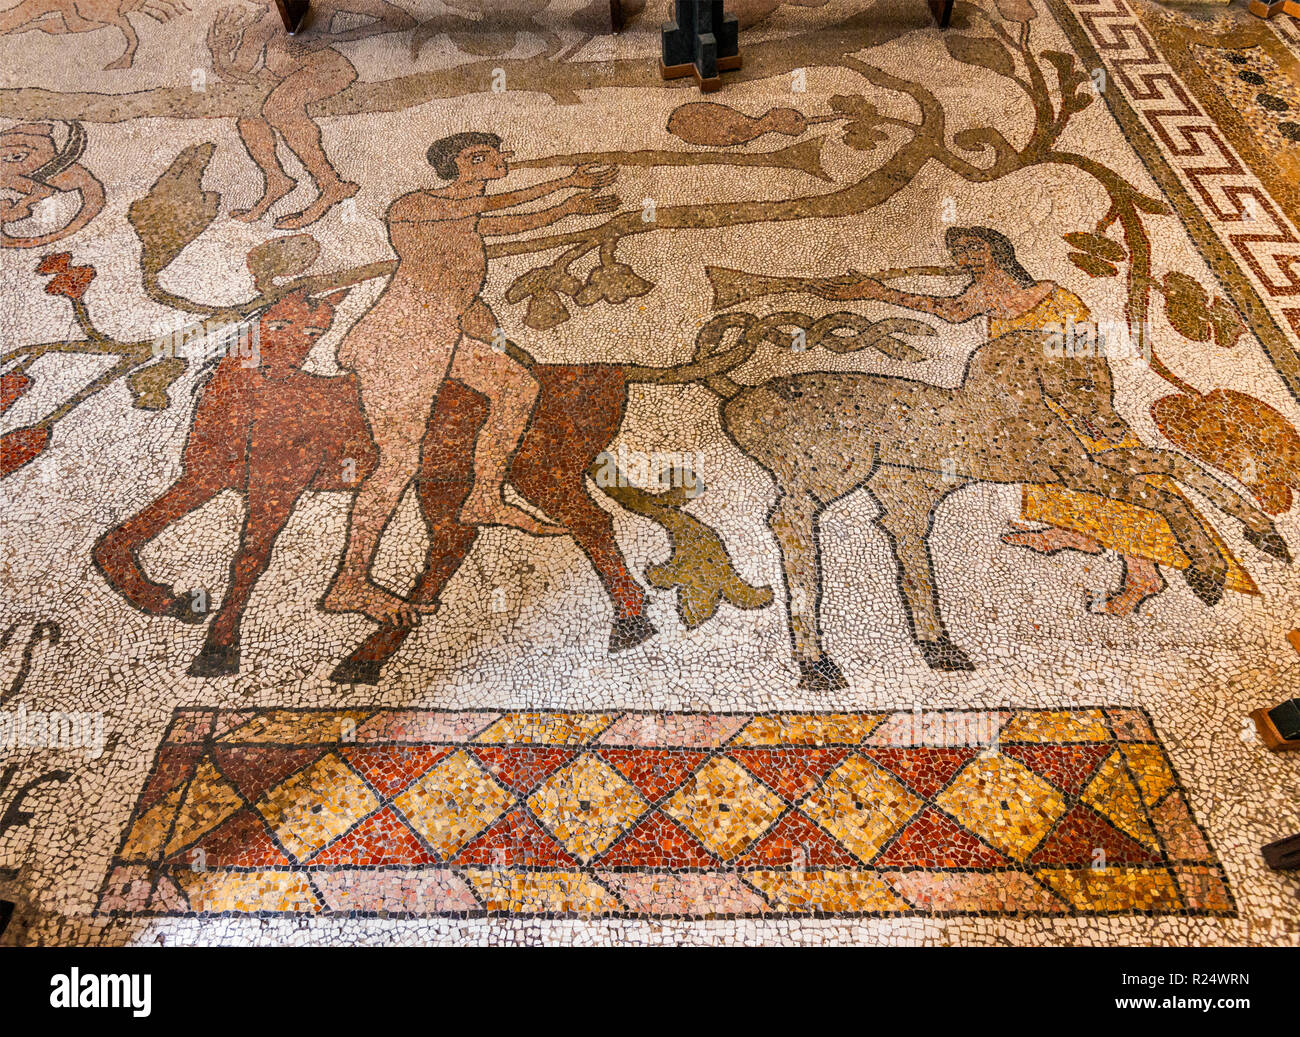 Tree of Life Mosaic, 12th century, on floor at Cathedral, 11th century, in Otranto, Apulia, Italy Stock Photo